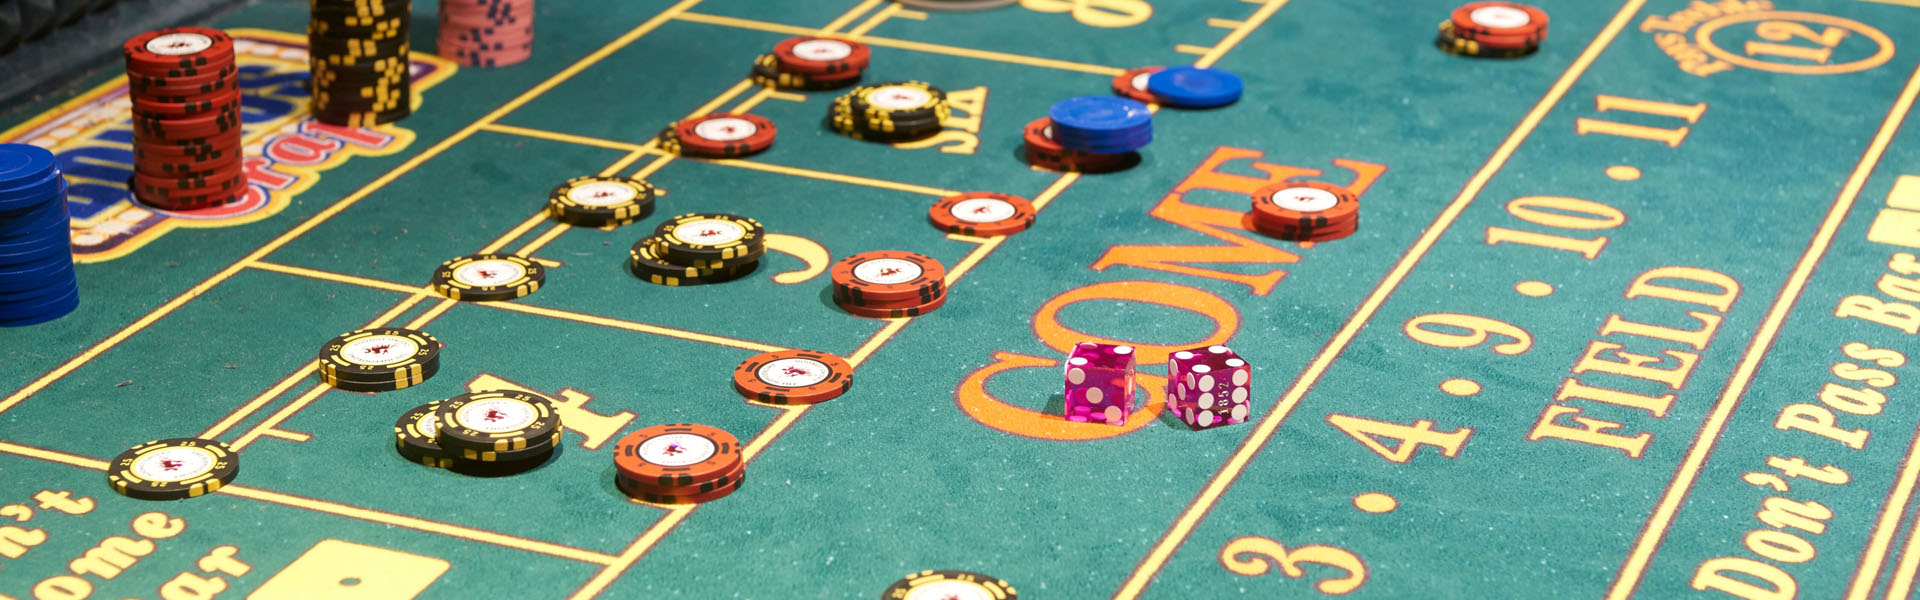 Hippodrome casino london craps betting bitcoin gambling sites list